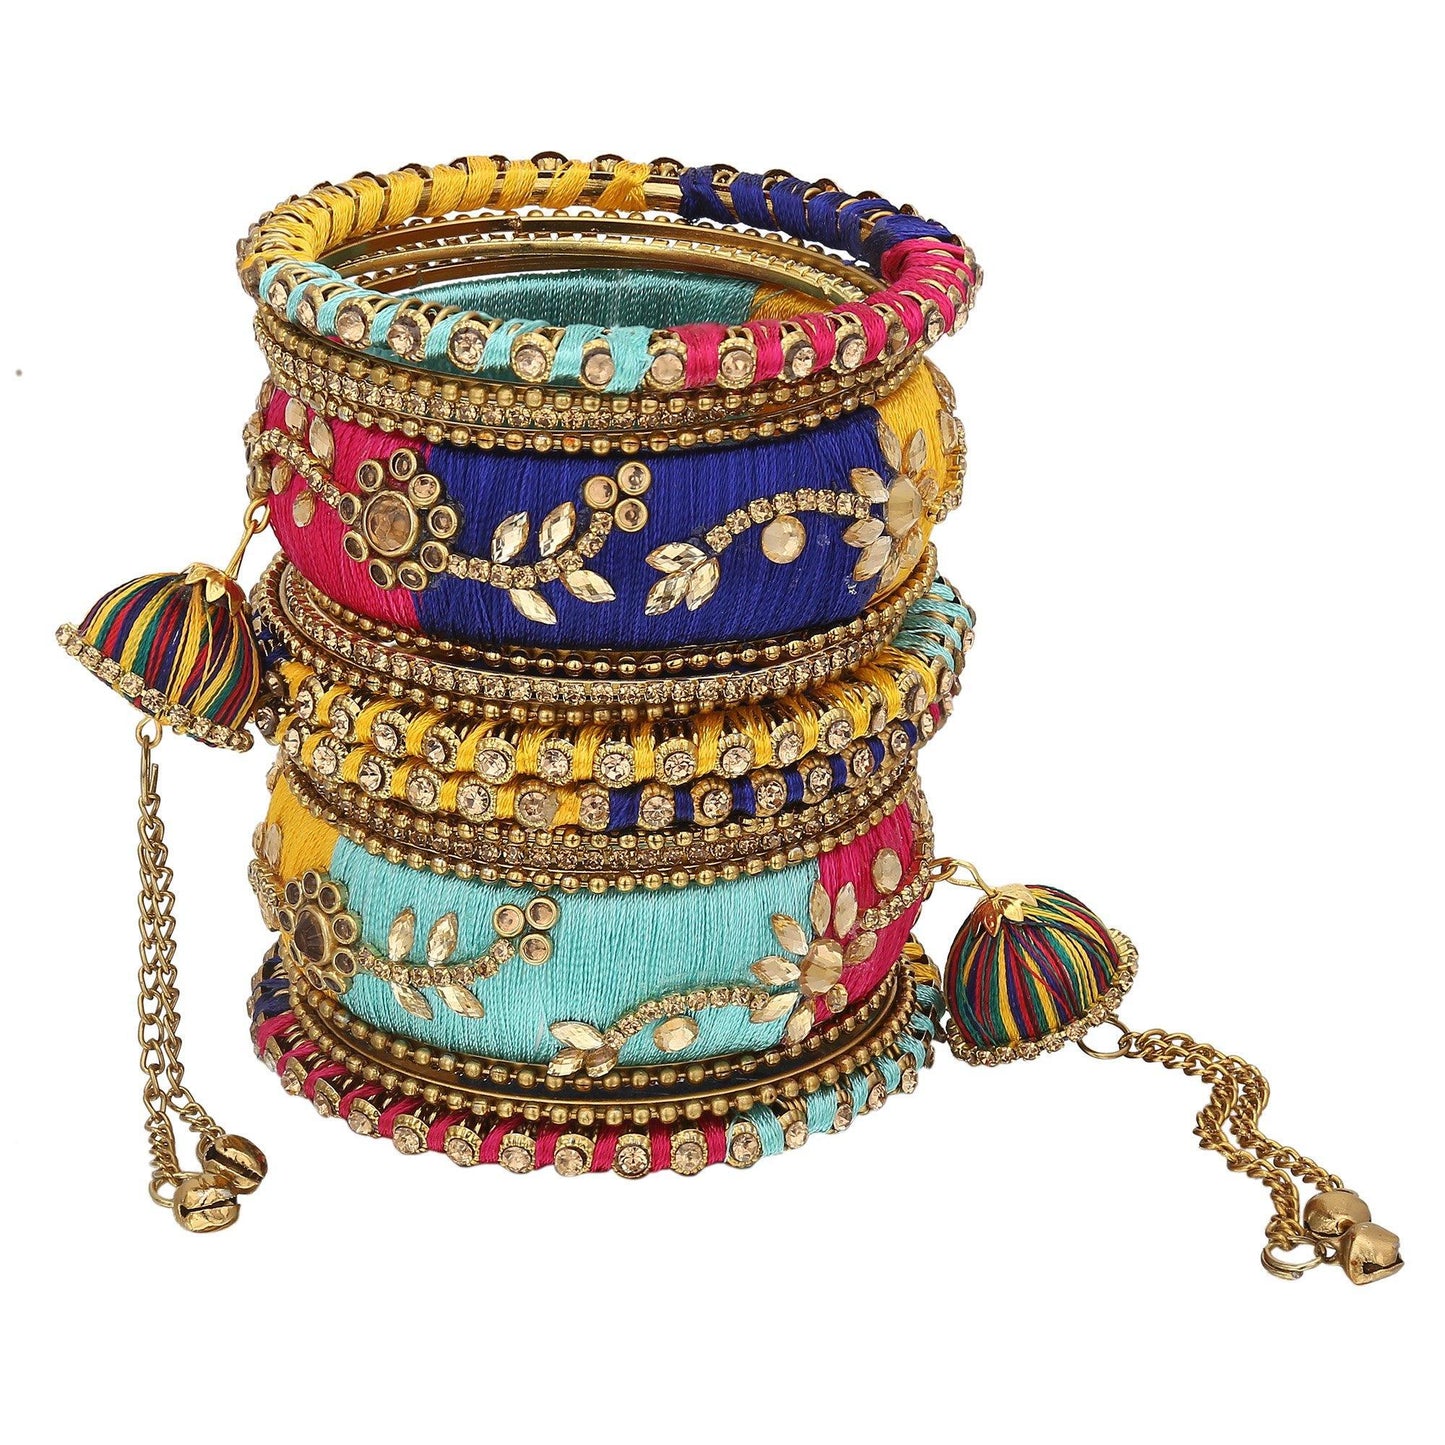 sukriti party wear silk thread tassel latkan multicolor bangles jewelry for girls & women – set of 18